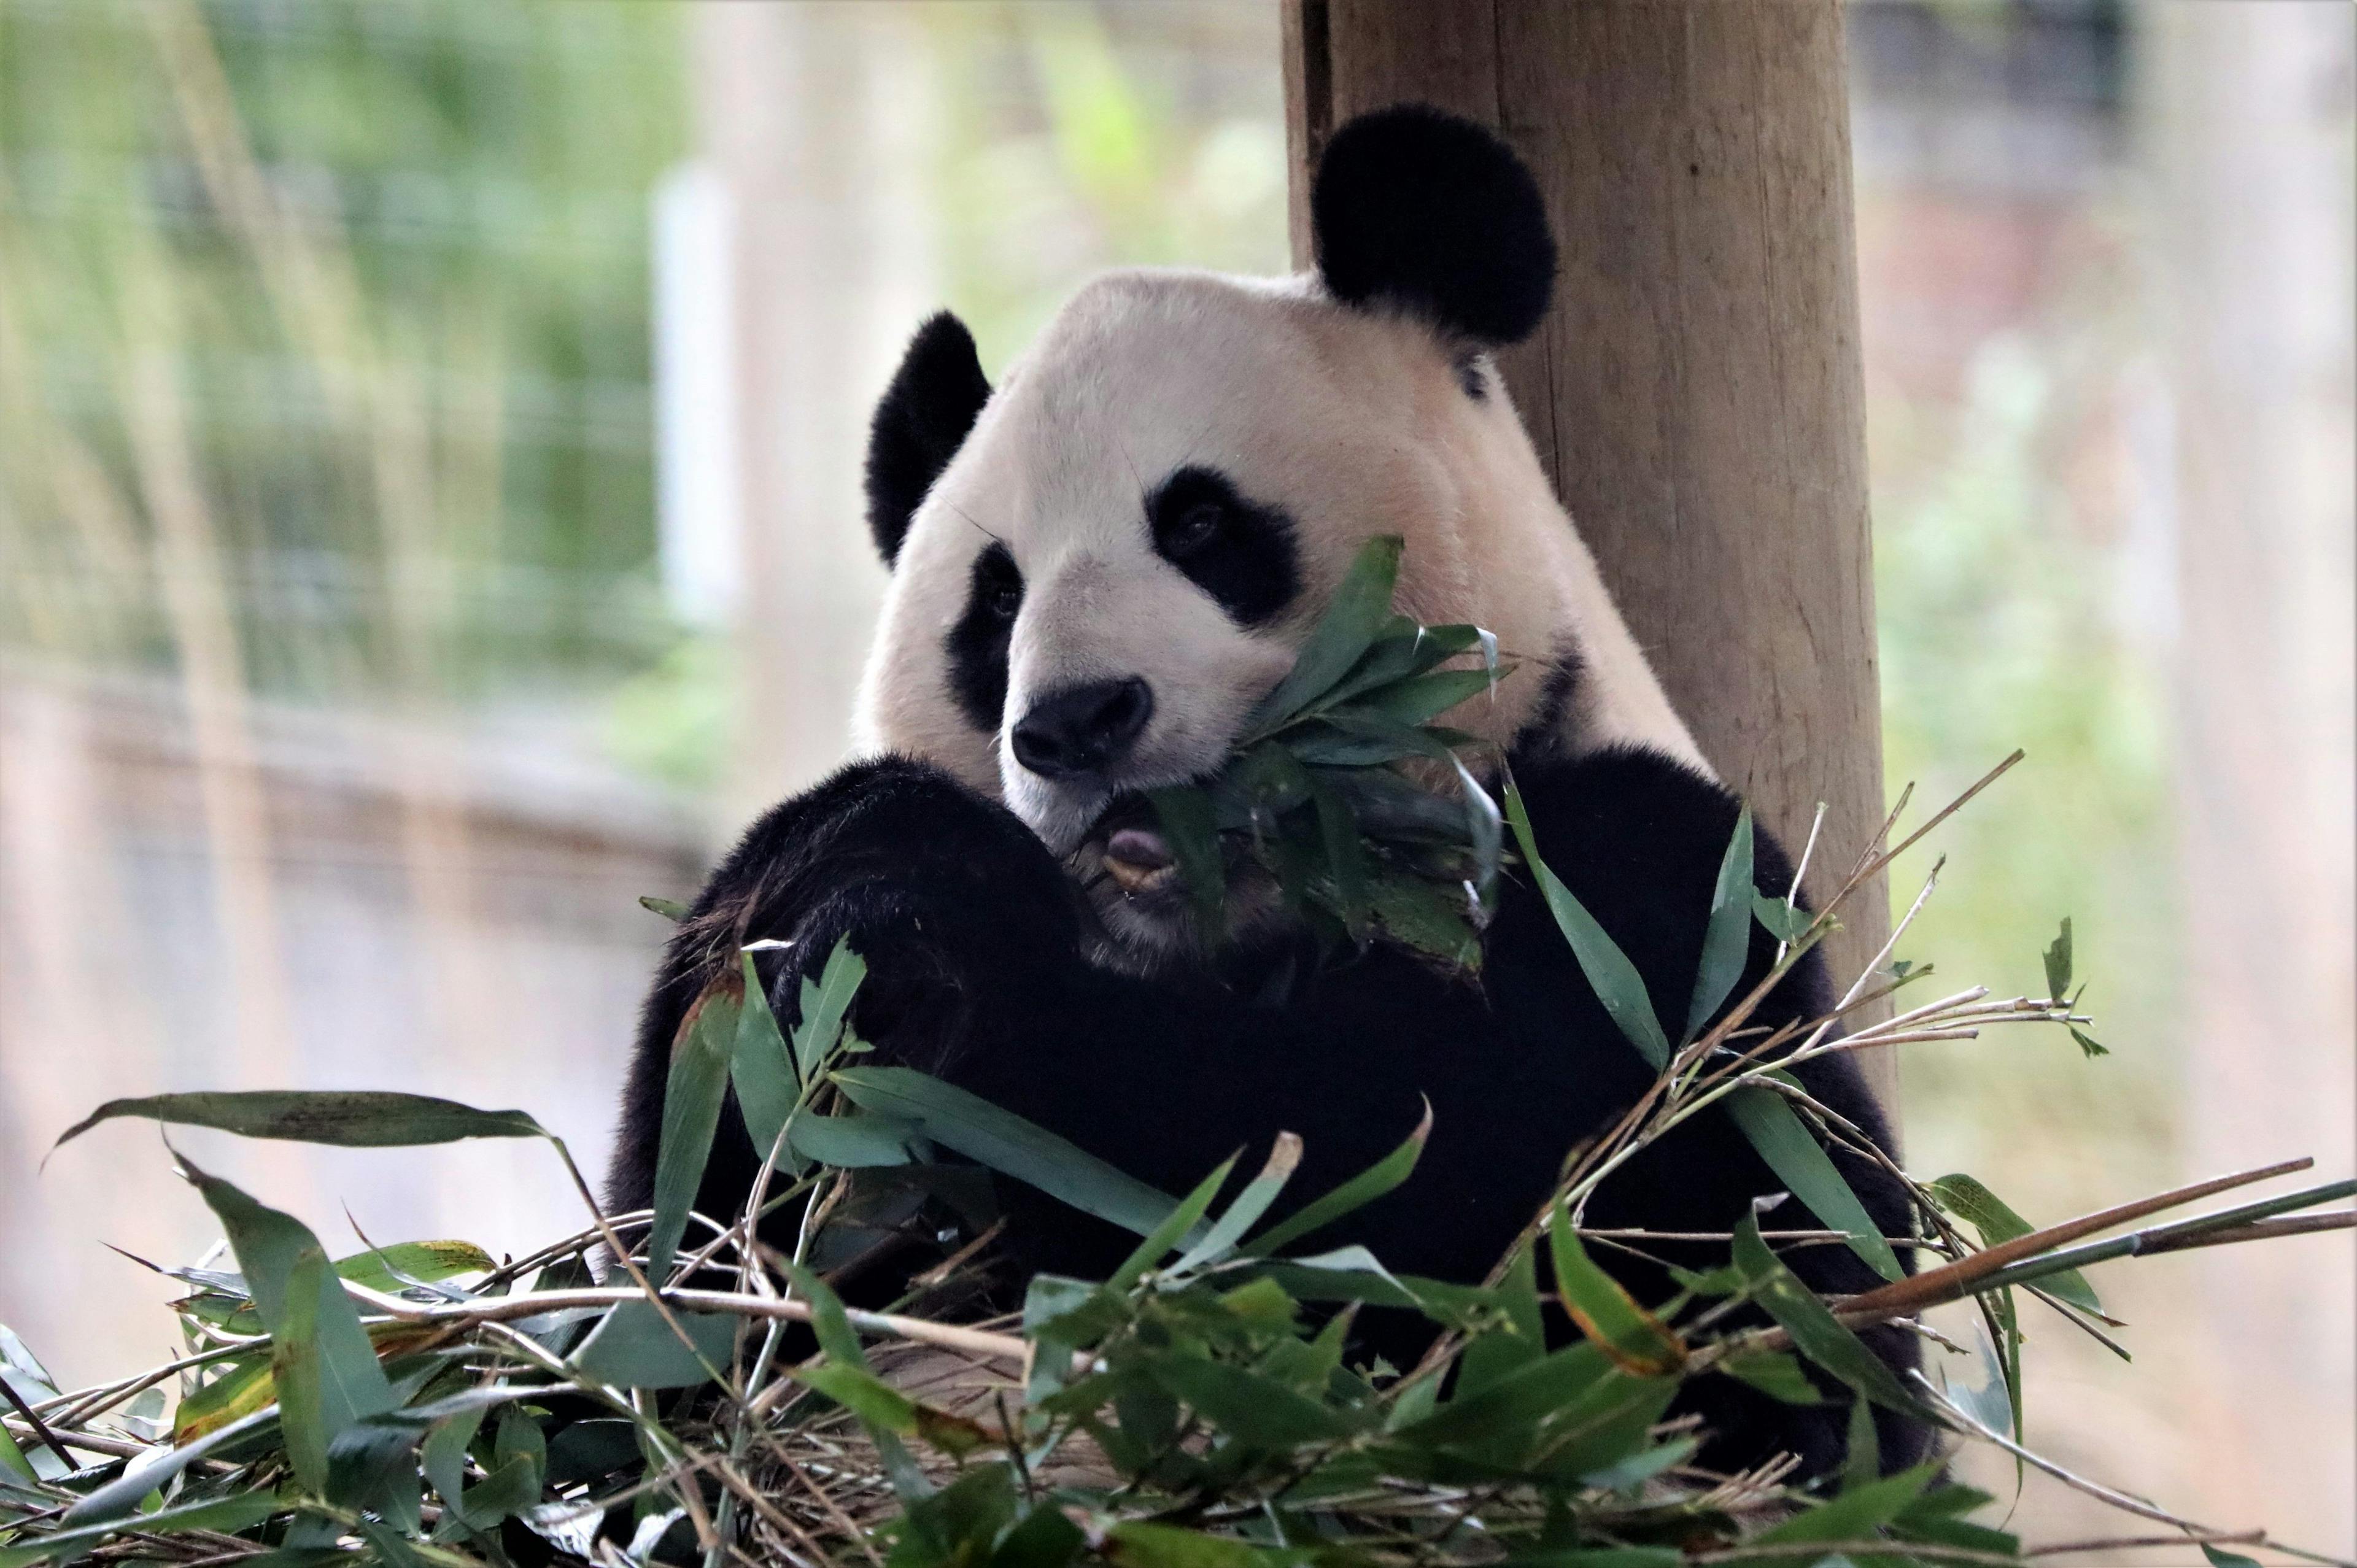 Edinburgh Zoo giant pandas heading back to China 